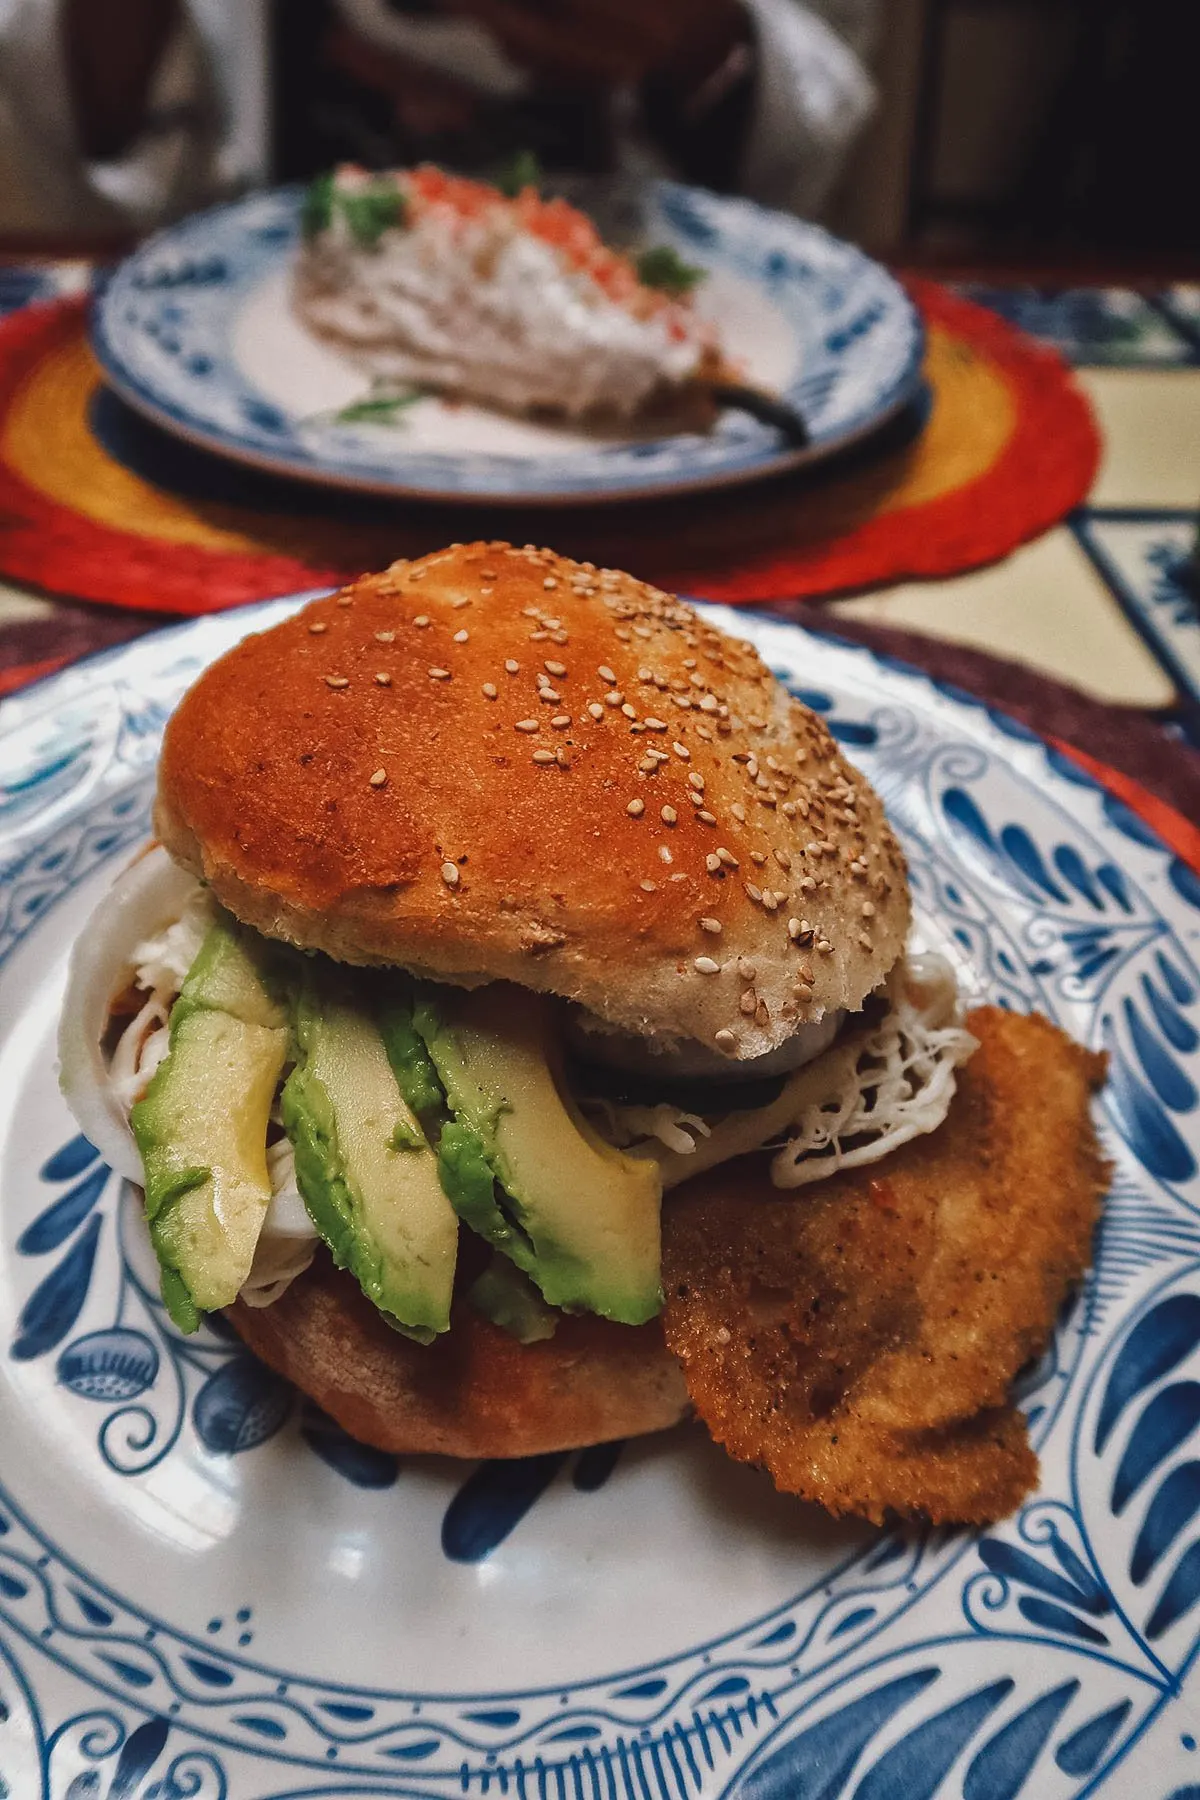 Cemita, the perfect Mexcian sandwich